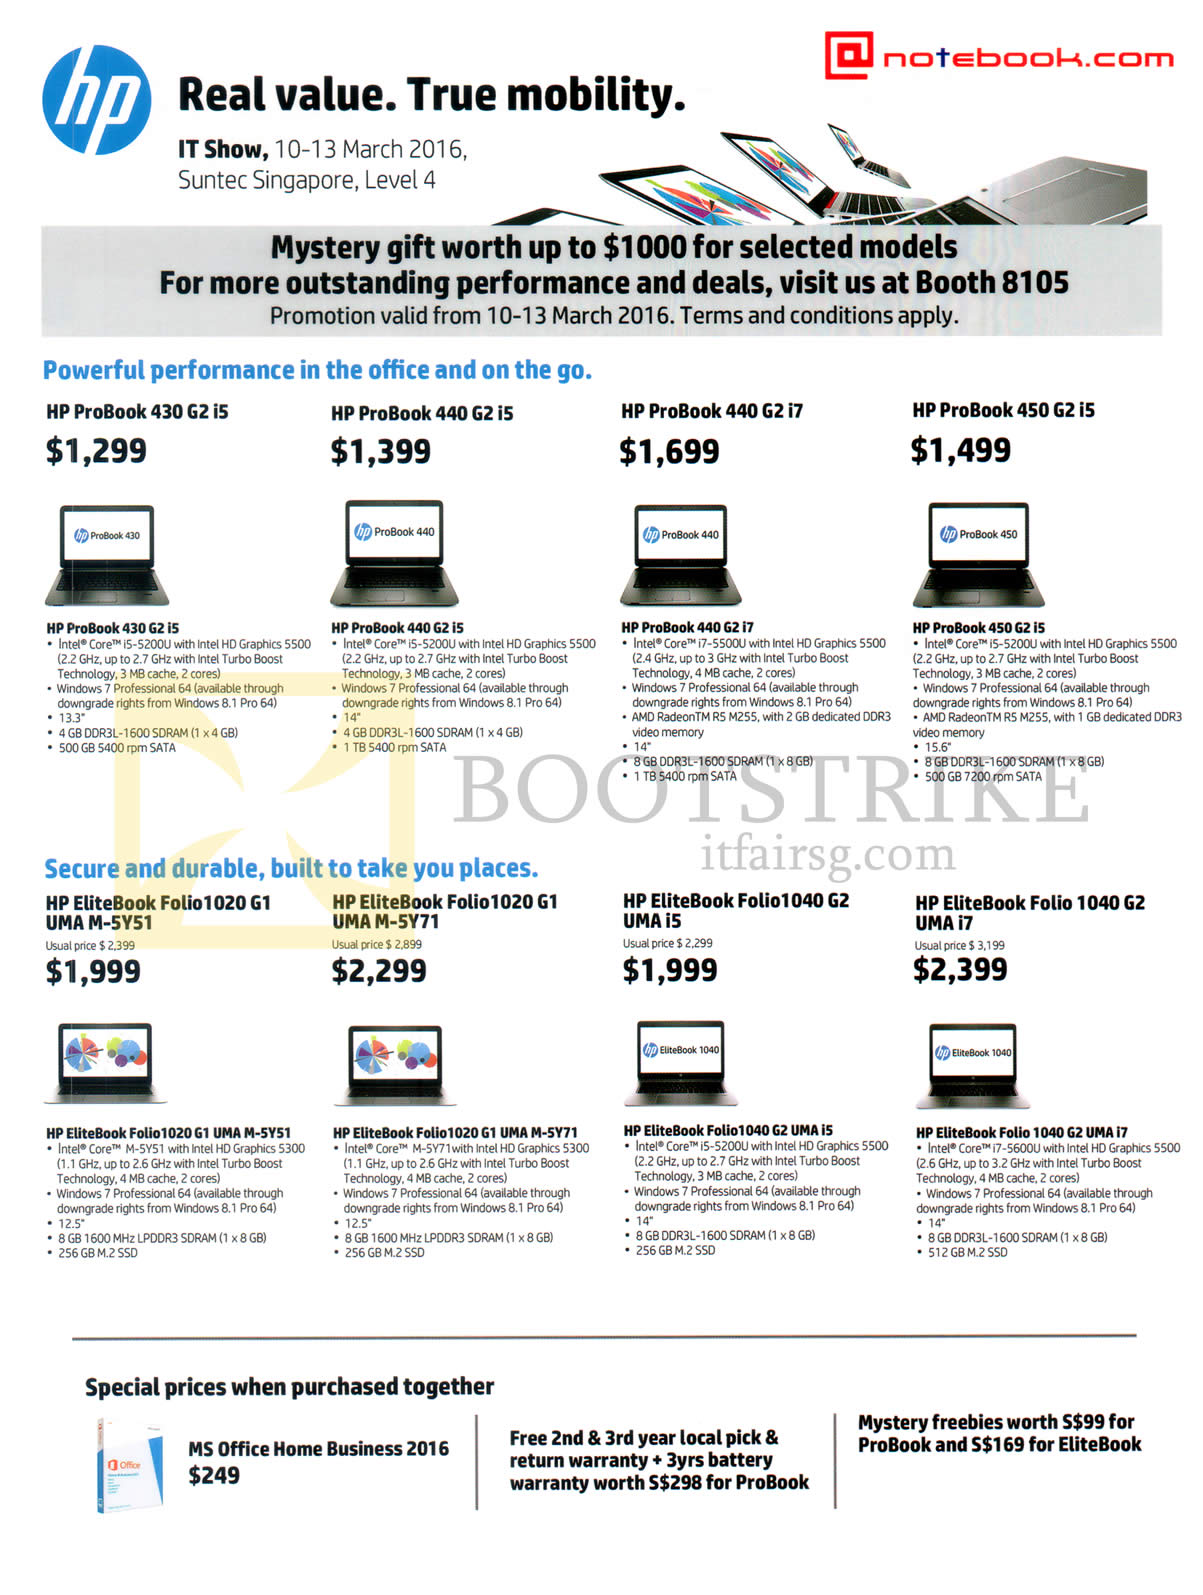 IT SHOW 2016 price list image brochure of HP Notebook.com Notebooks Probook 430 G2, 440 G2, 450 G2, EliteBook Folio 1020 G1, 1040 G2